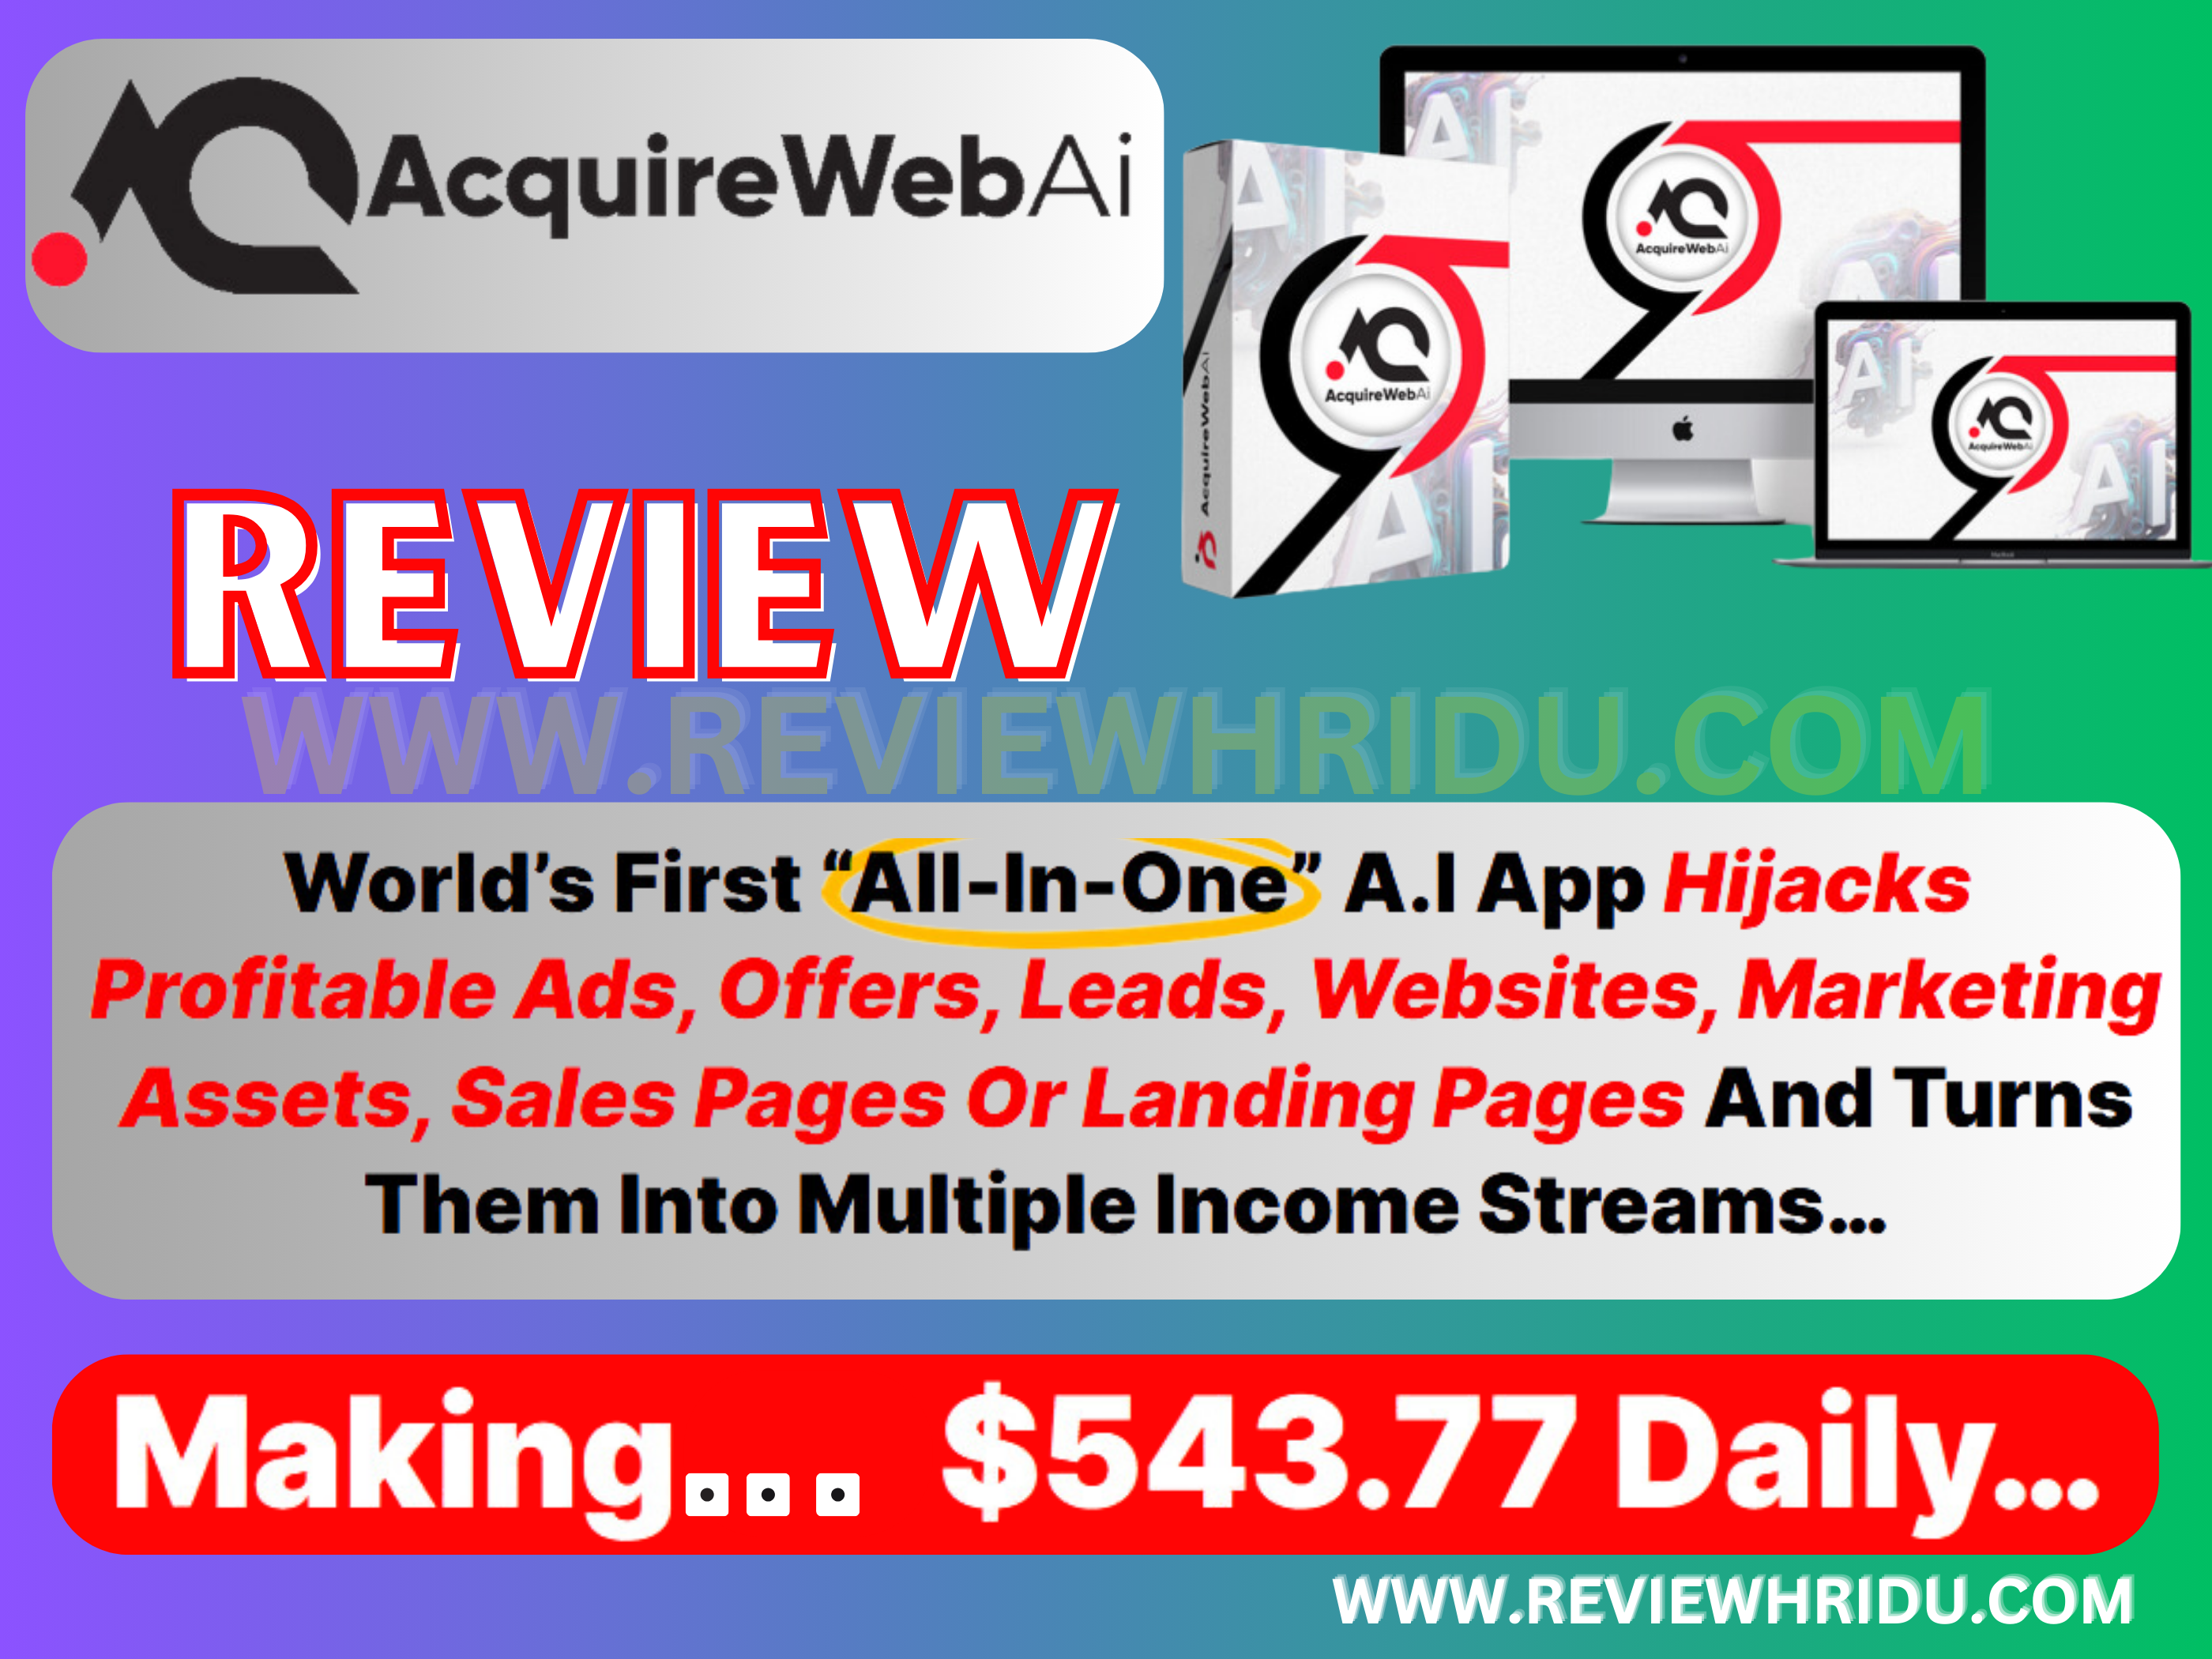 AcquireWebAI Review || Making $543.77 Daily…